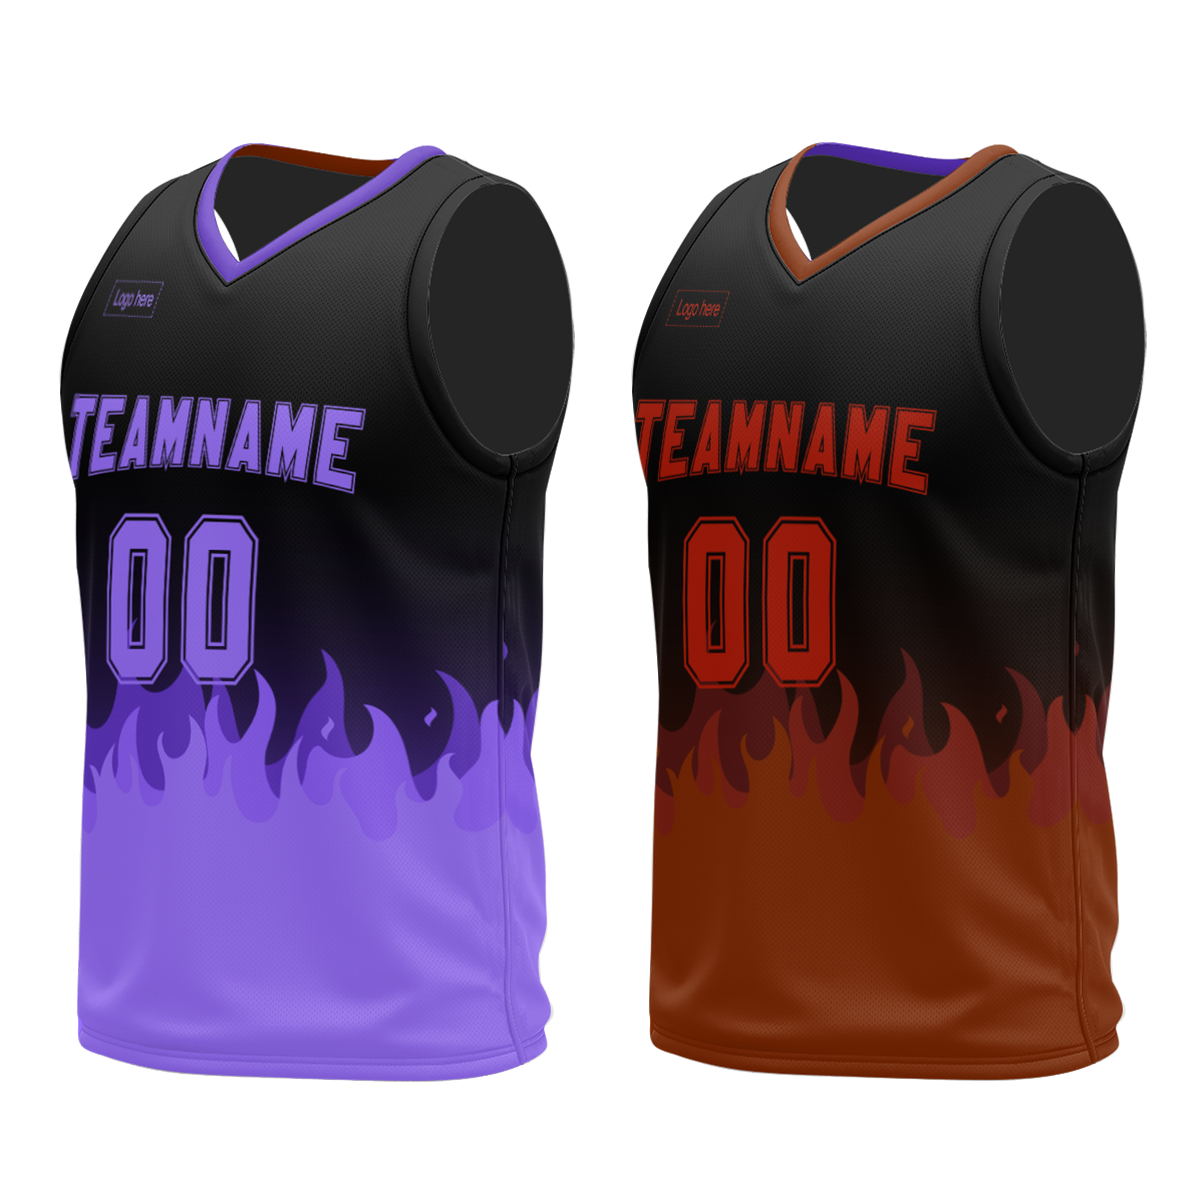 wholesale-custom-sublimation-printing-short-sleeve-sportswear-competitive-reversible-basketball-jersey-at-cj-pod-5